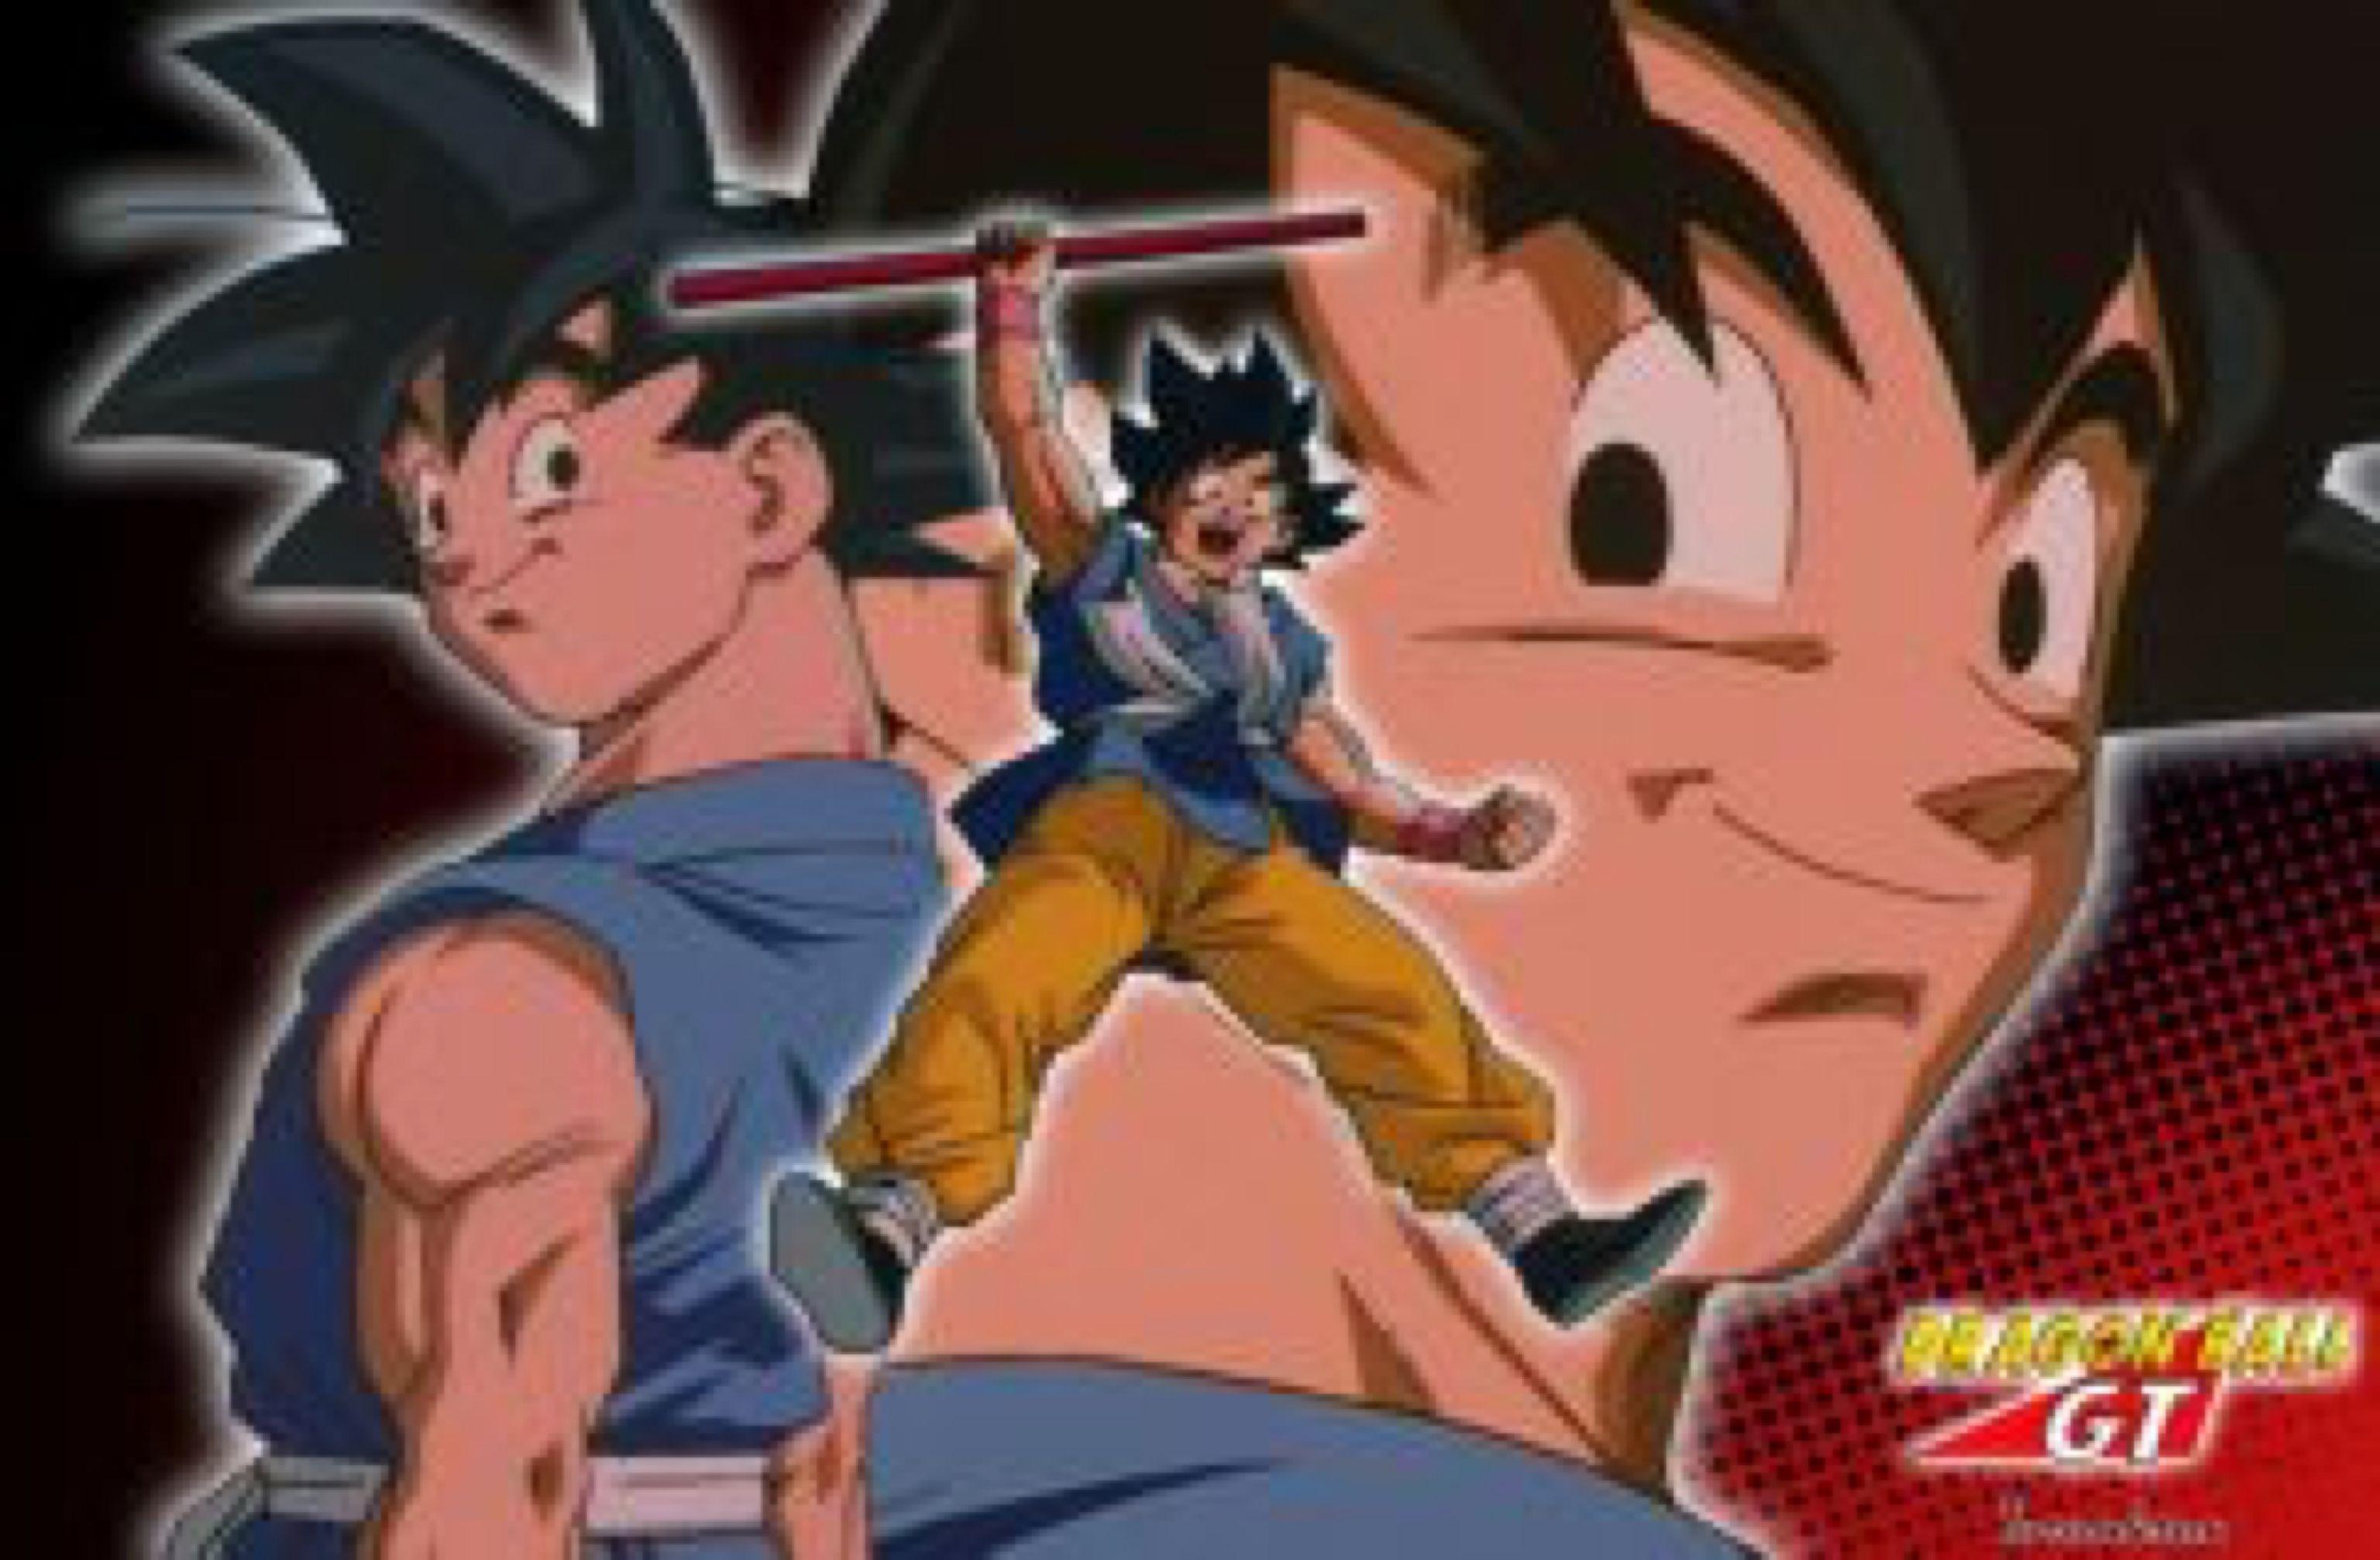 Goku GT Wallpaper Free Goku GT Background